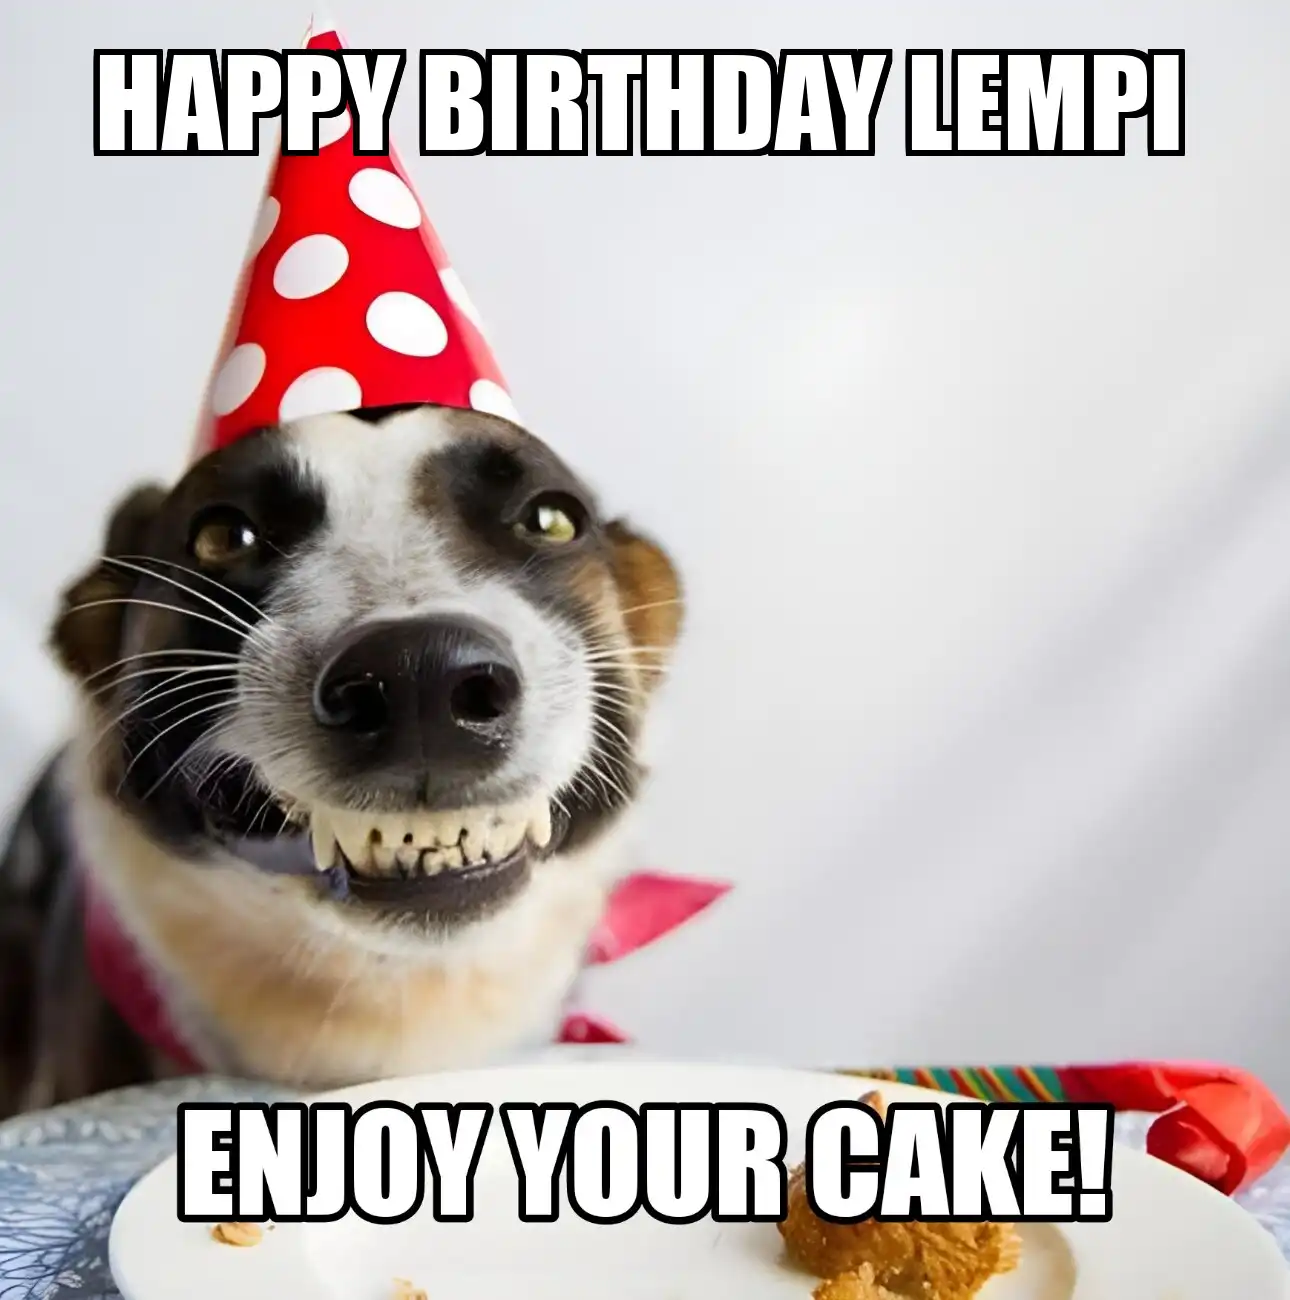 Happy Birthday Lempi Enjoy Your Cake Dog Meme